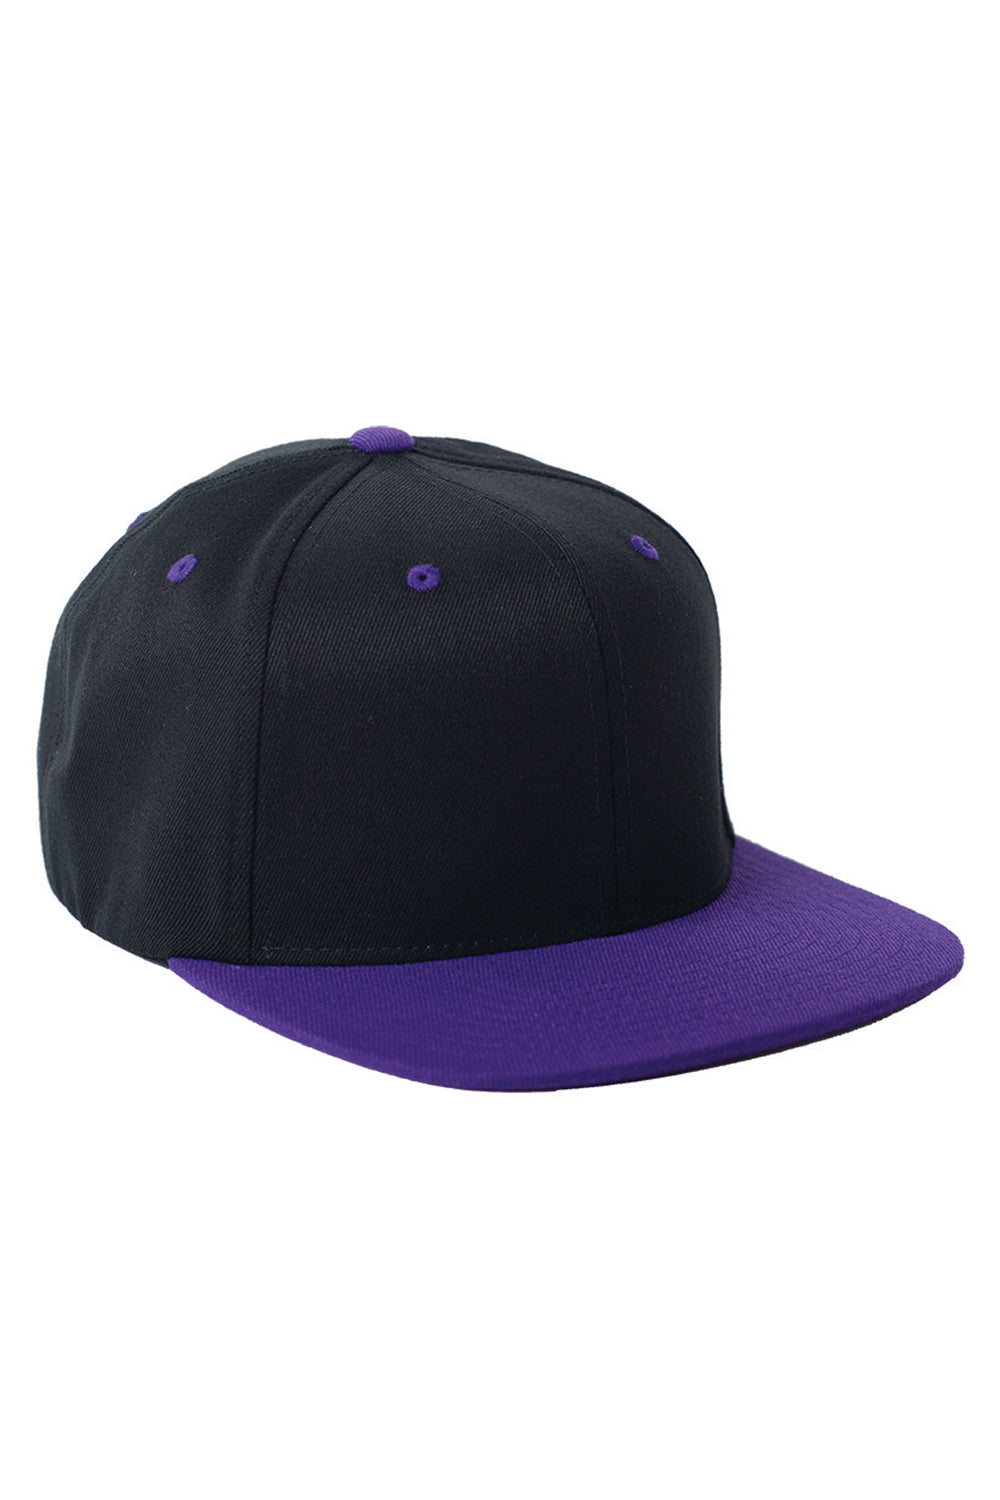 Flexfit 110FT Mens Adjustable Hat Black/Purple Front